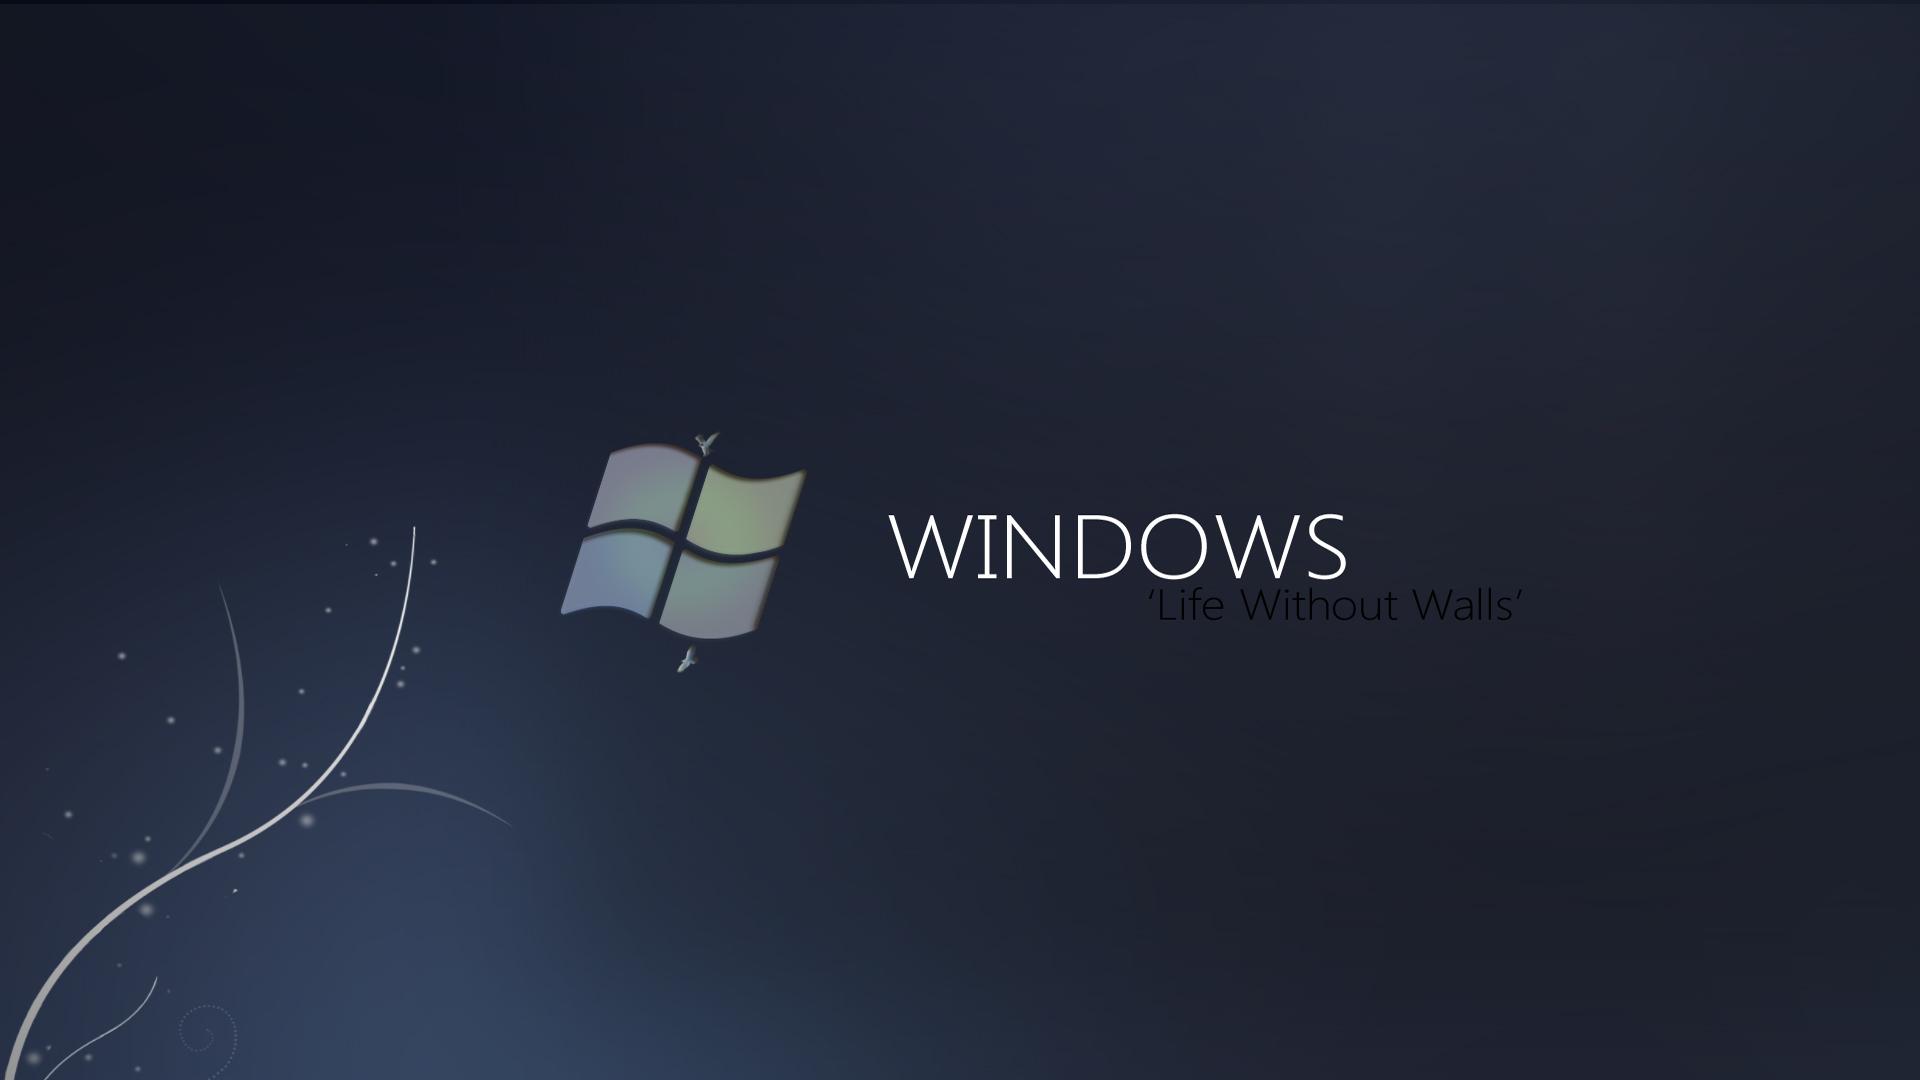 Windows Server Wallpaper 1920x1080 (187.89 KB)